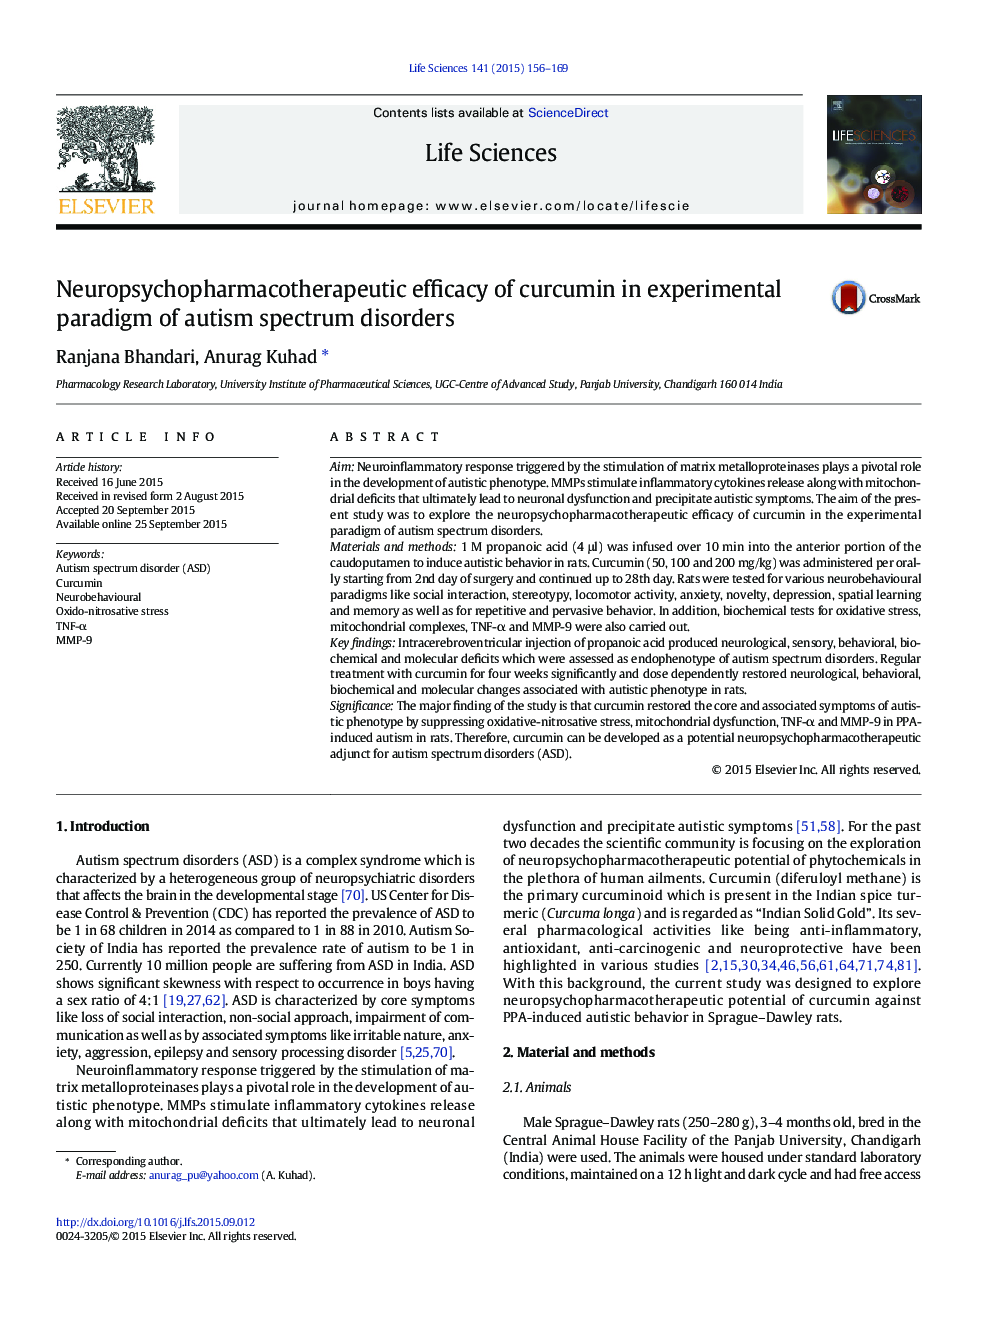 Neuropsychopharmacotherapeutic efficacy of curcumin in experimental paradigm of autism spectrum disorders